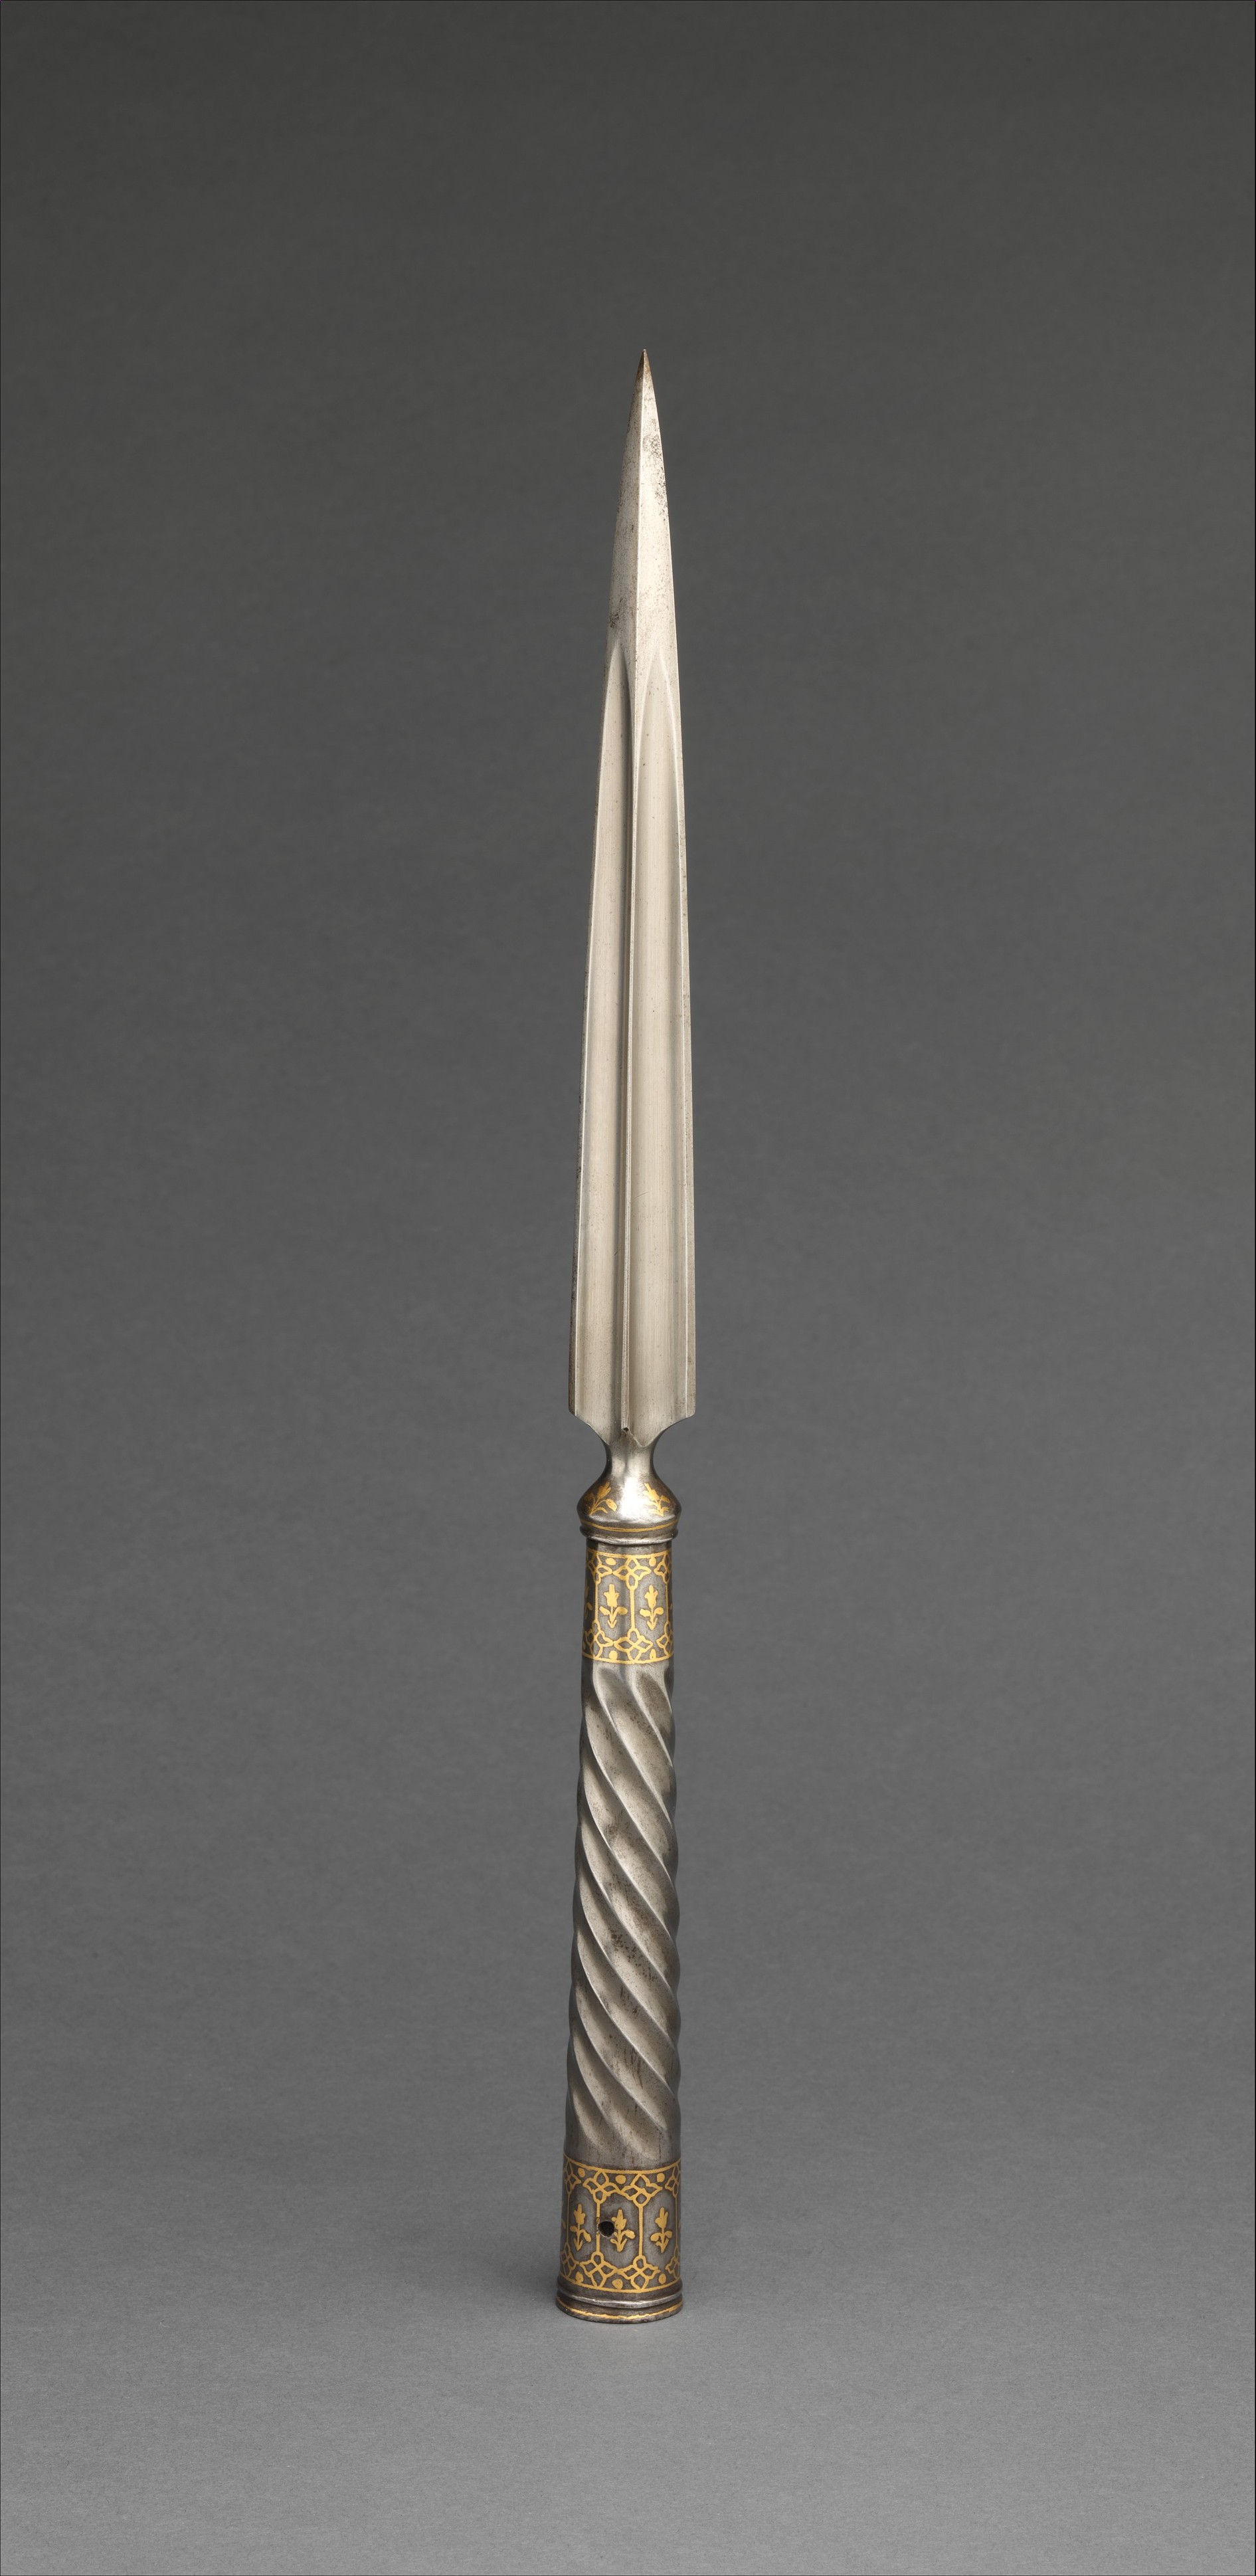 native american spear